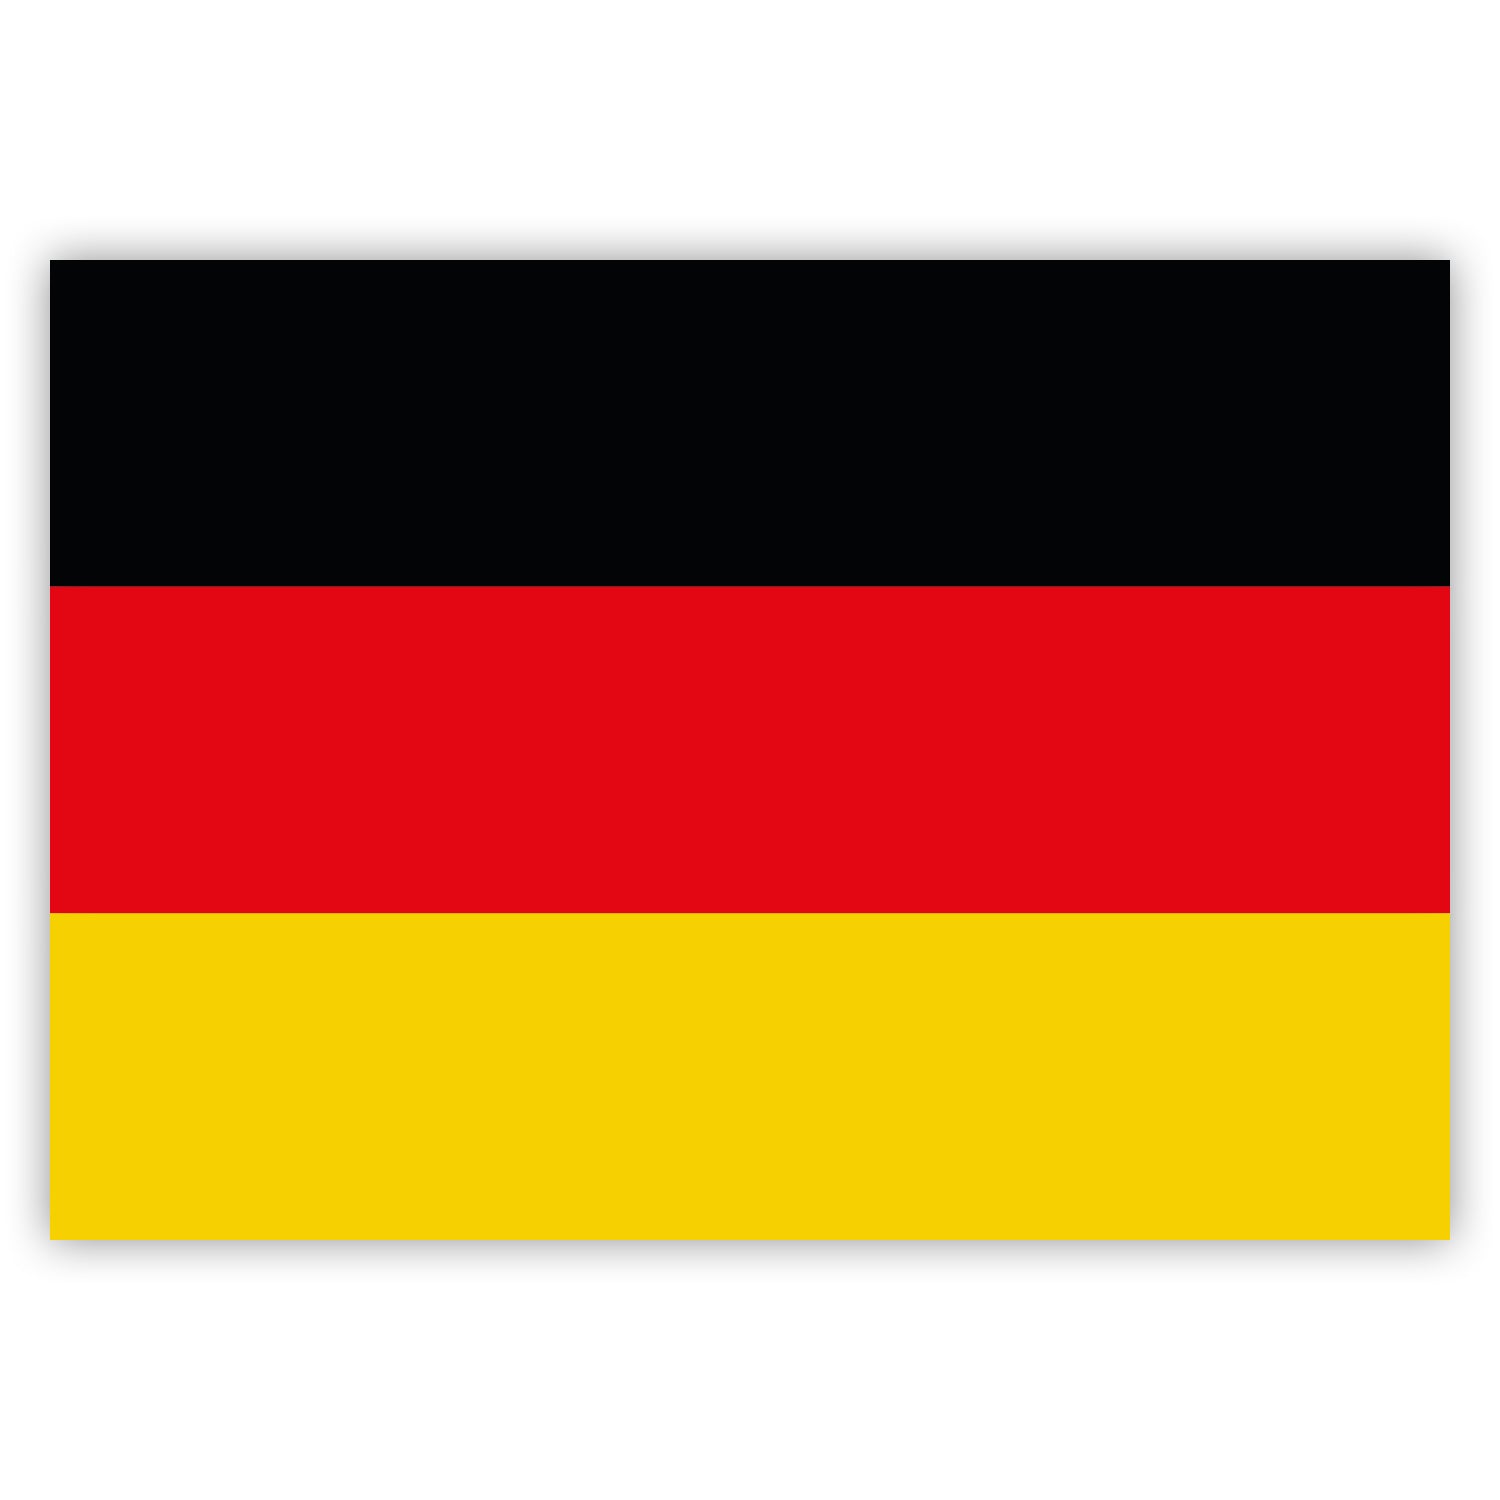 10 German Flag Stickers - 7.4 x 5.2 cm - Germany Vinyl Stickers